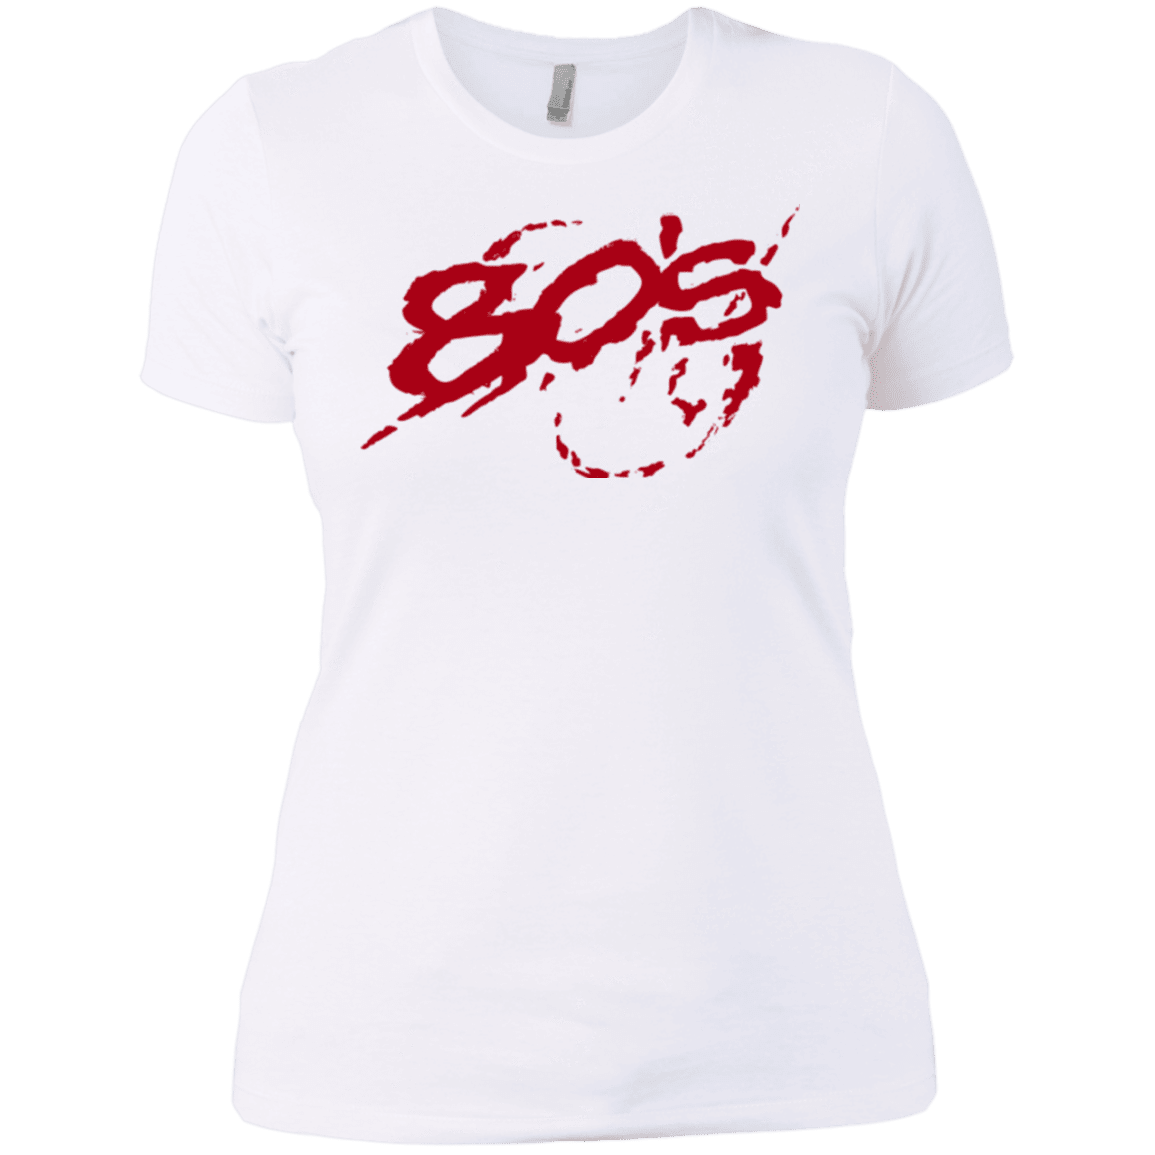 T-Shirts White / X-Small 80s 300 Women's Premium T-Shirt